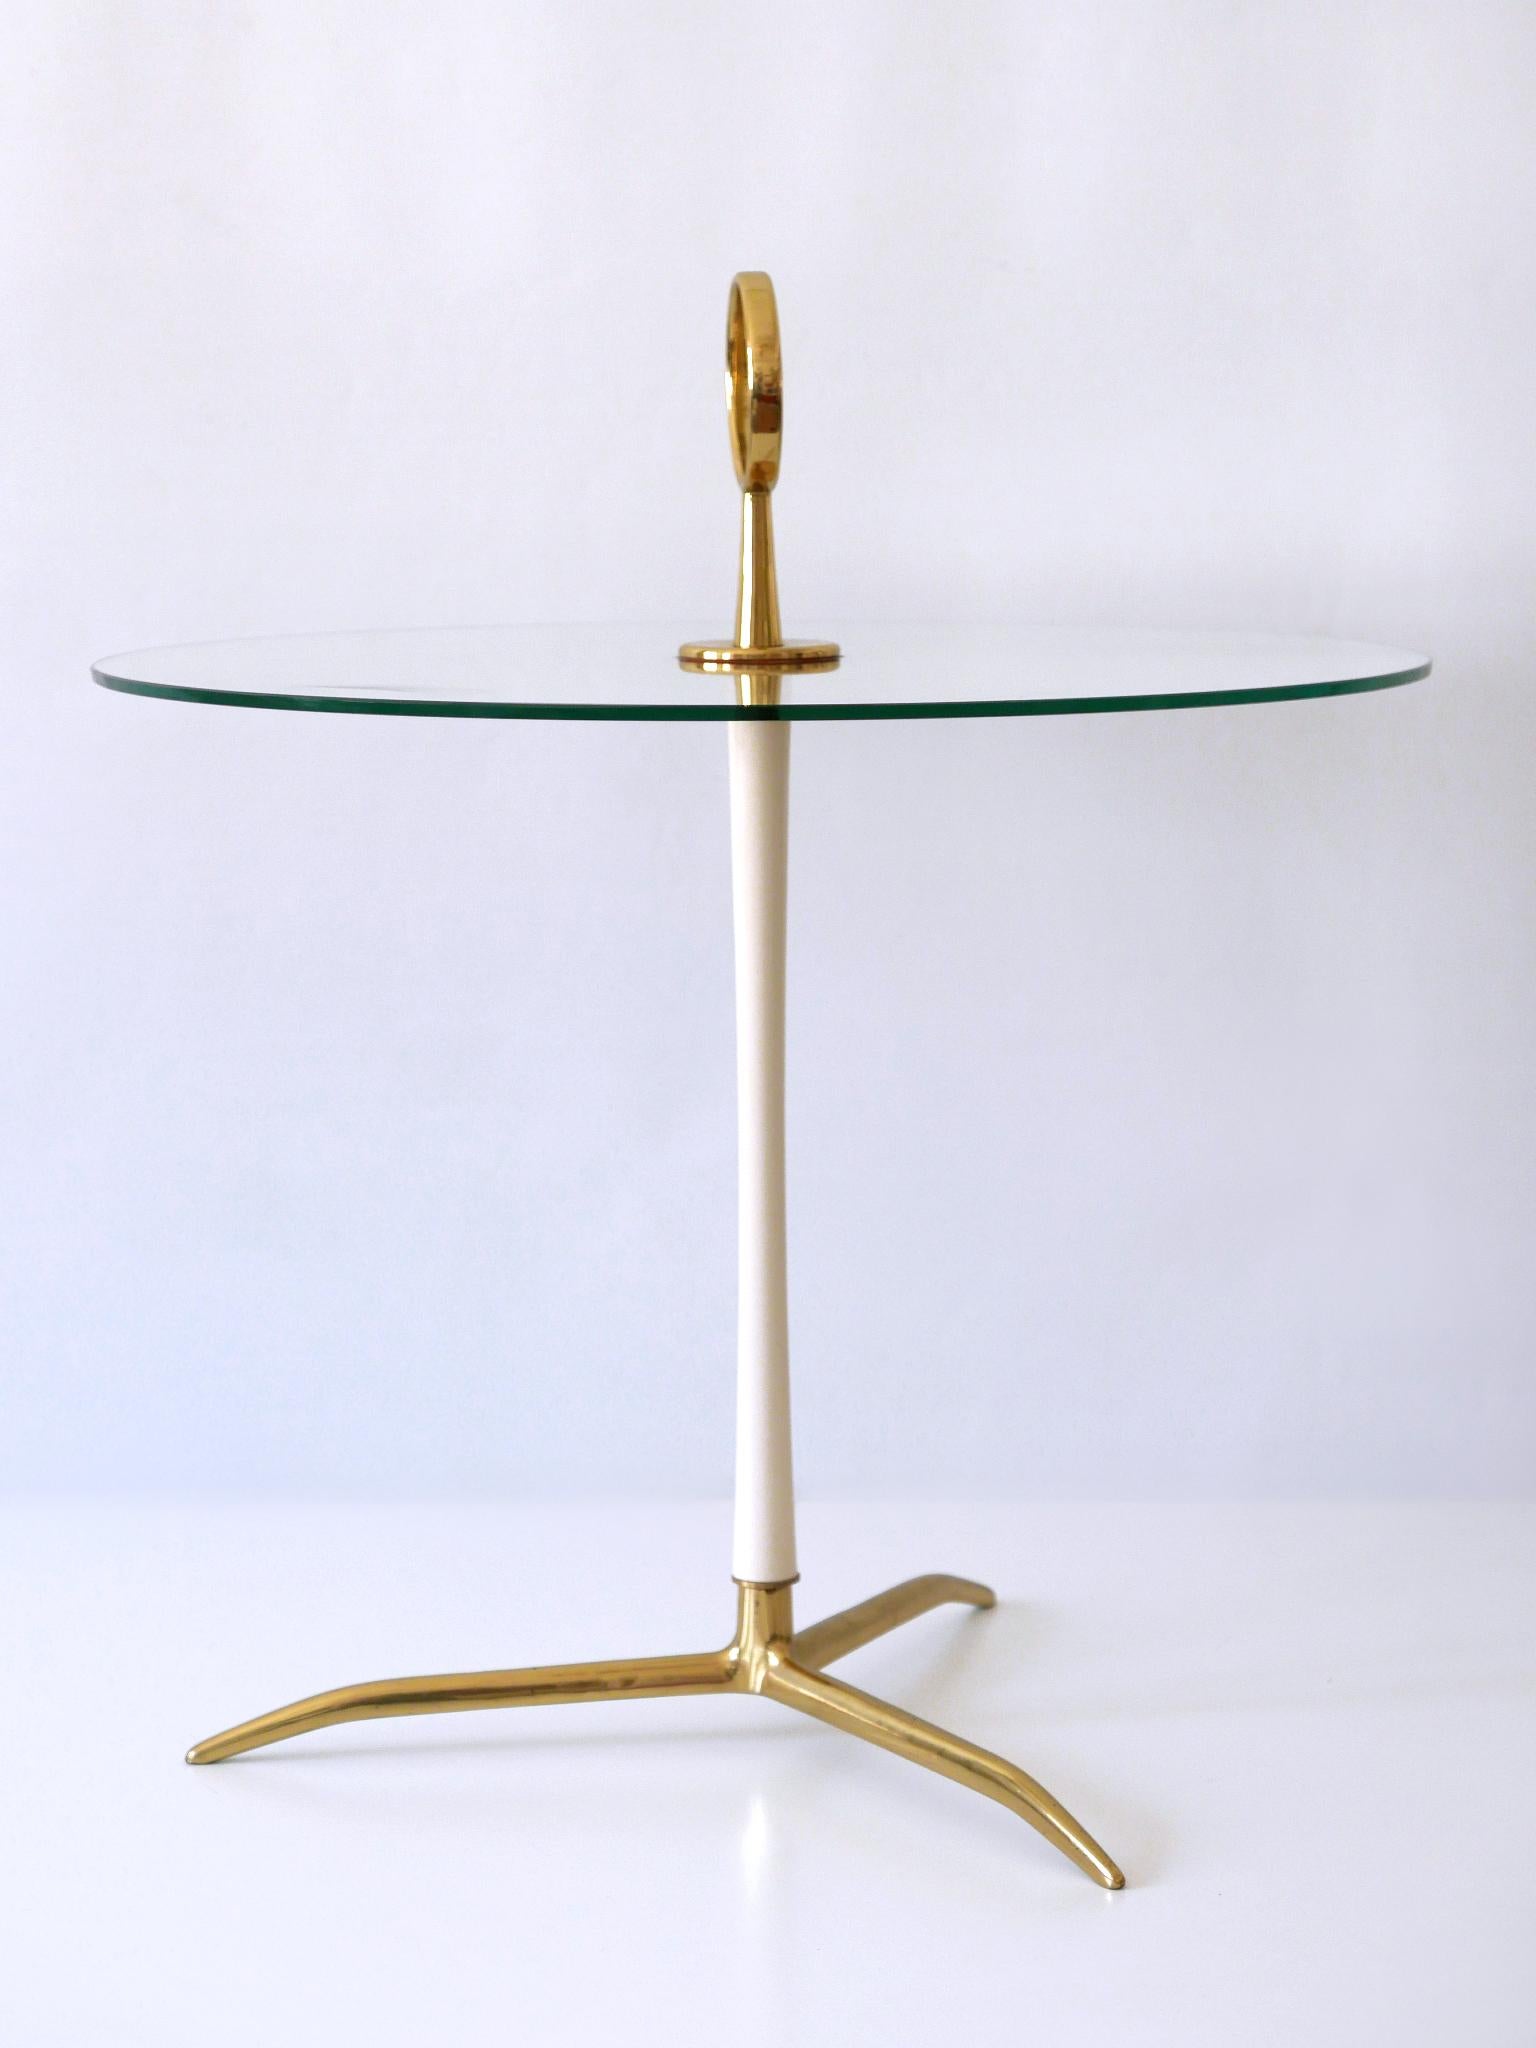 Elegant Mid-Century Modern Side Table by Vereinigte Werkstätten Germany 1950s For Sale 9